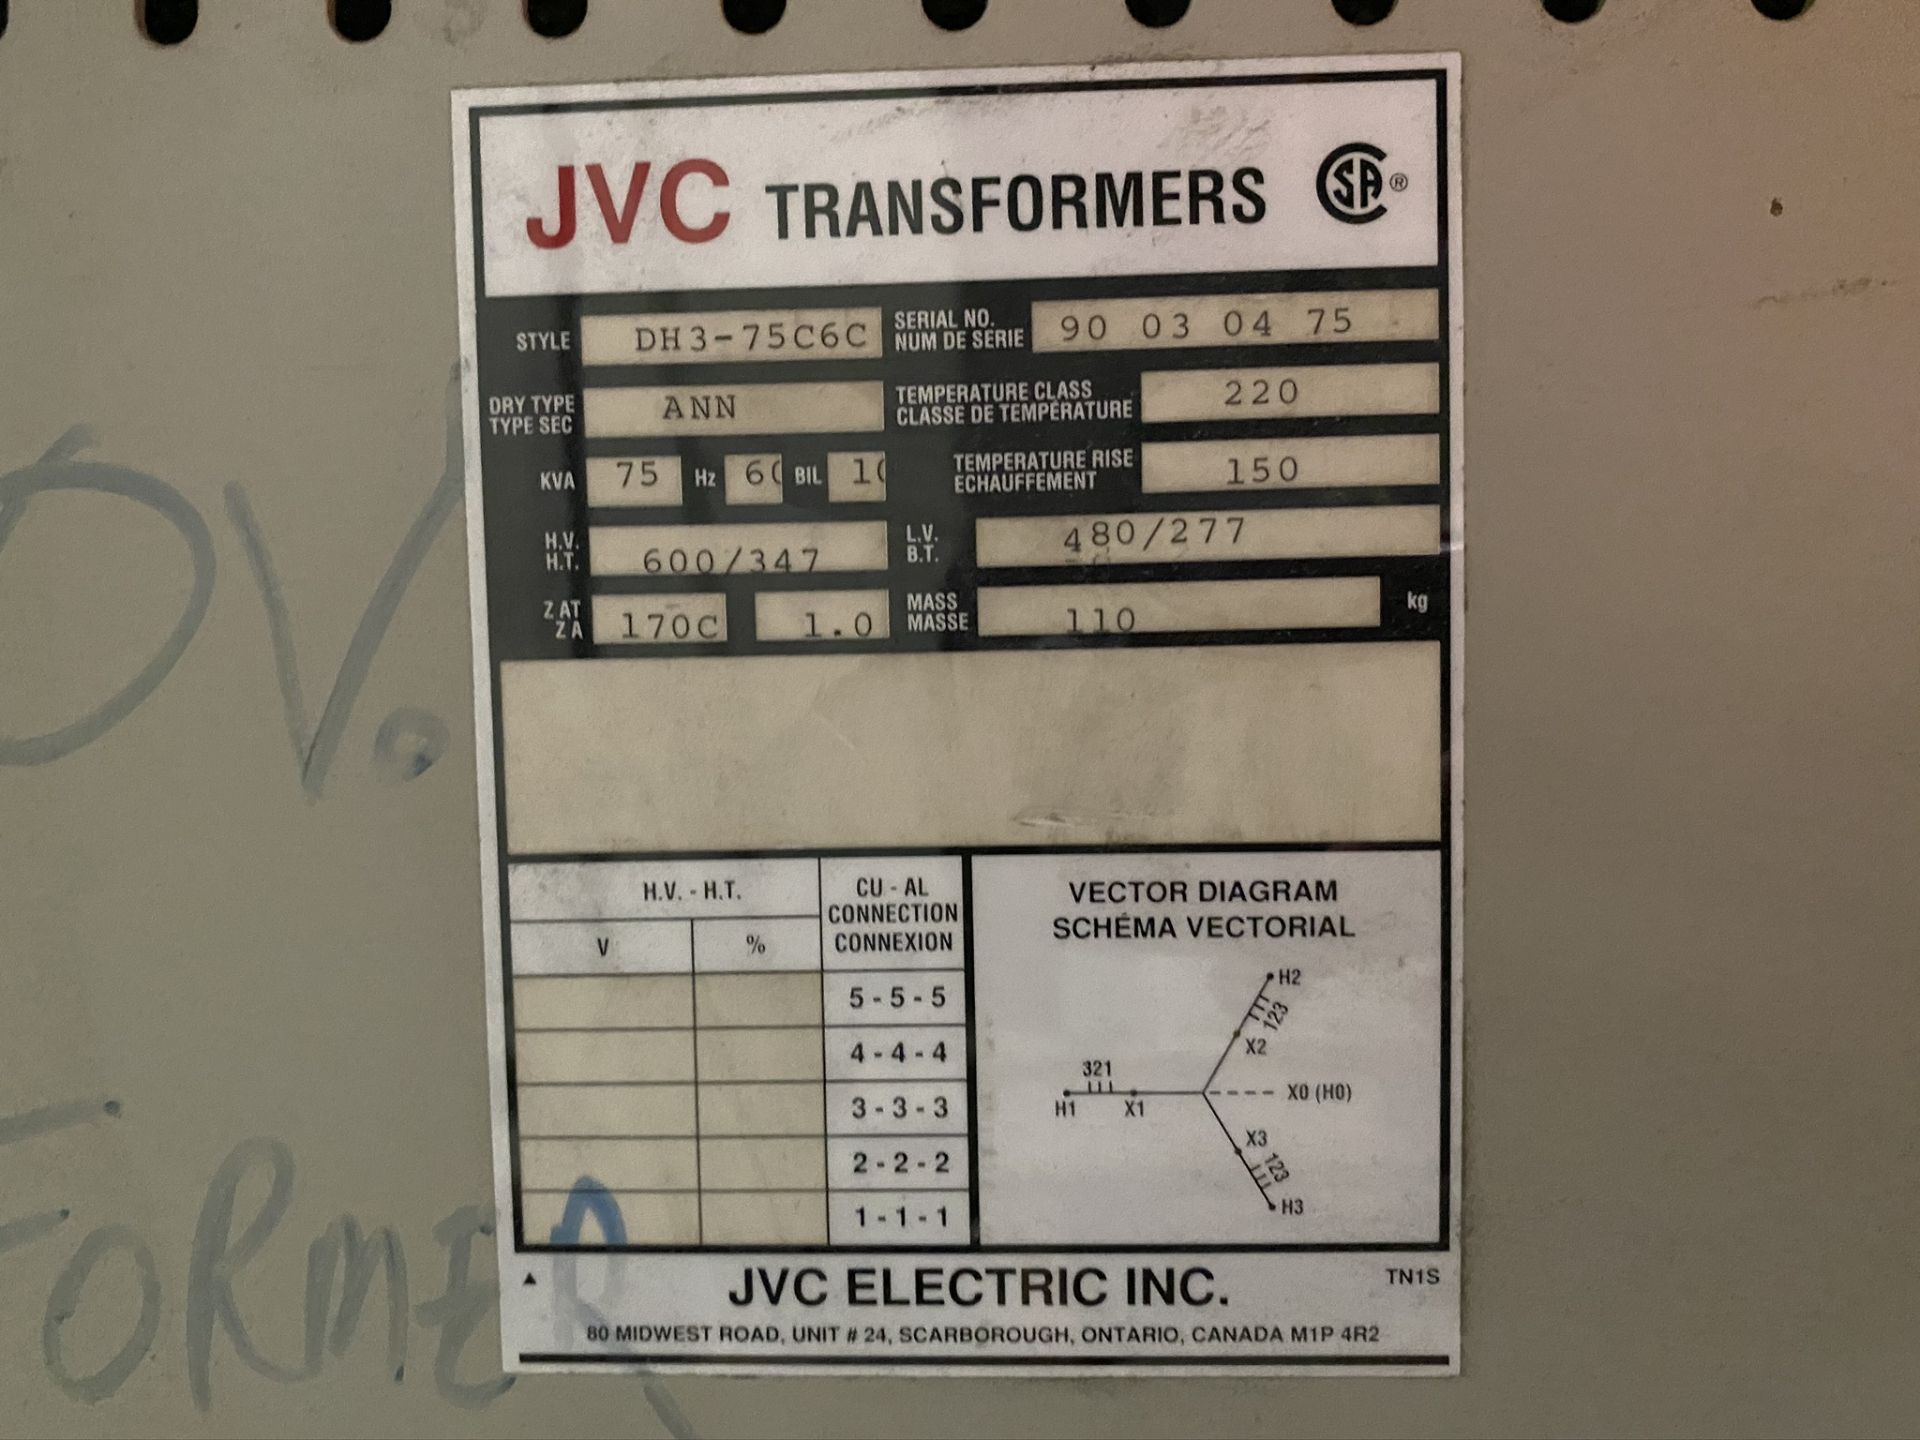 JVC Electric TransformerDH3-75C6C. S/N 90-03-04-75. 75KVA, 600/347V PRIMARY, 480/277V SECONDARY ( - Image 3 of 3